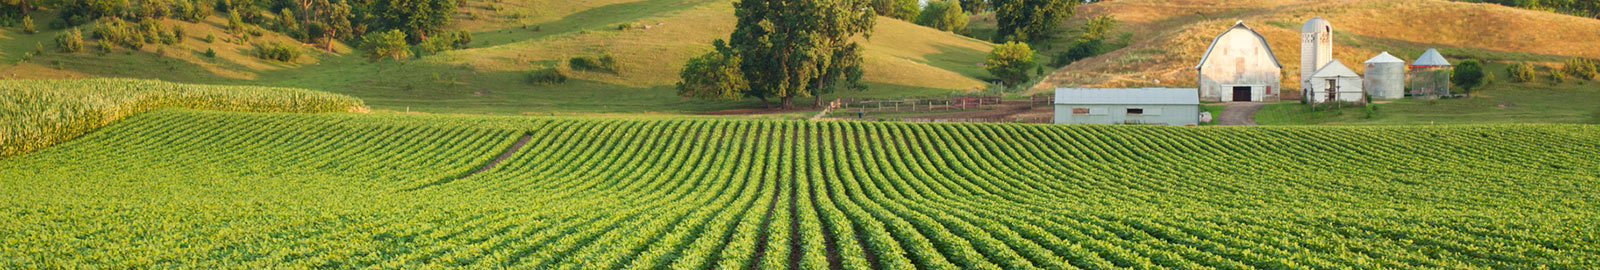 a field full of crops